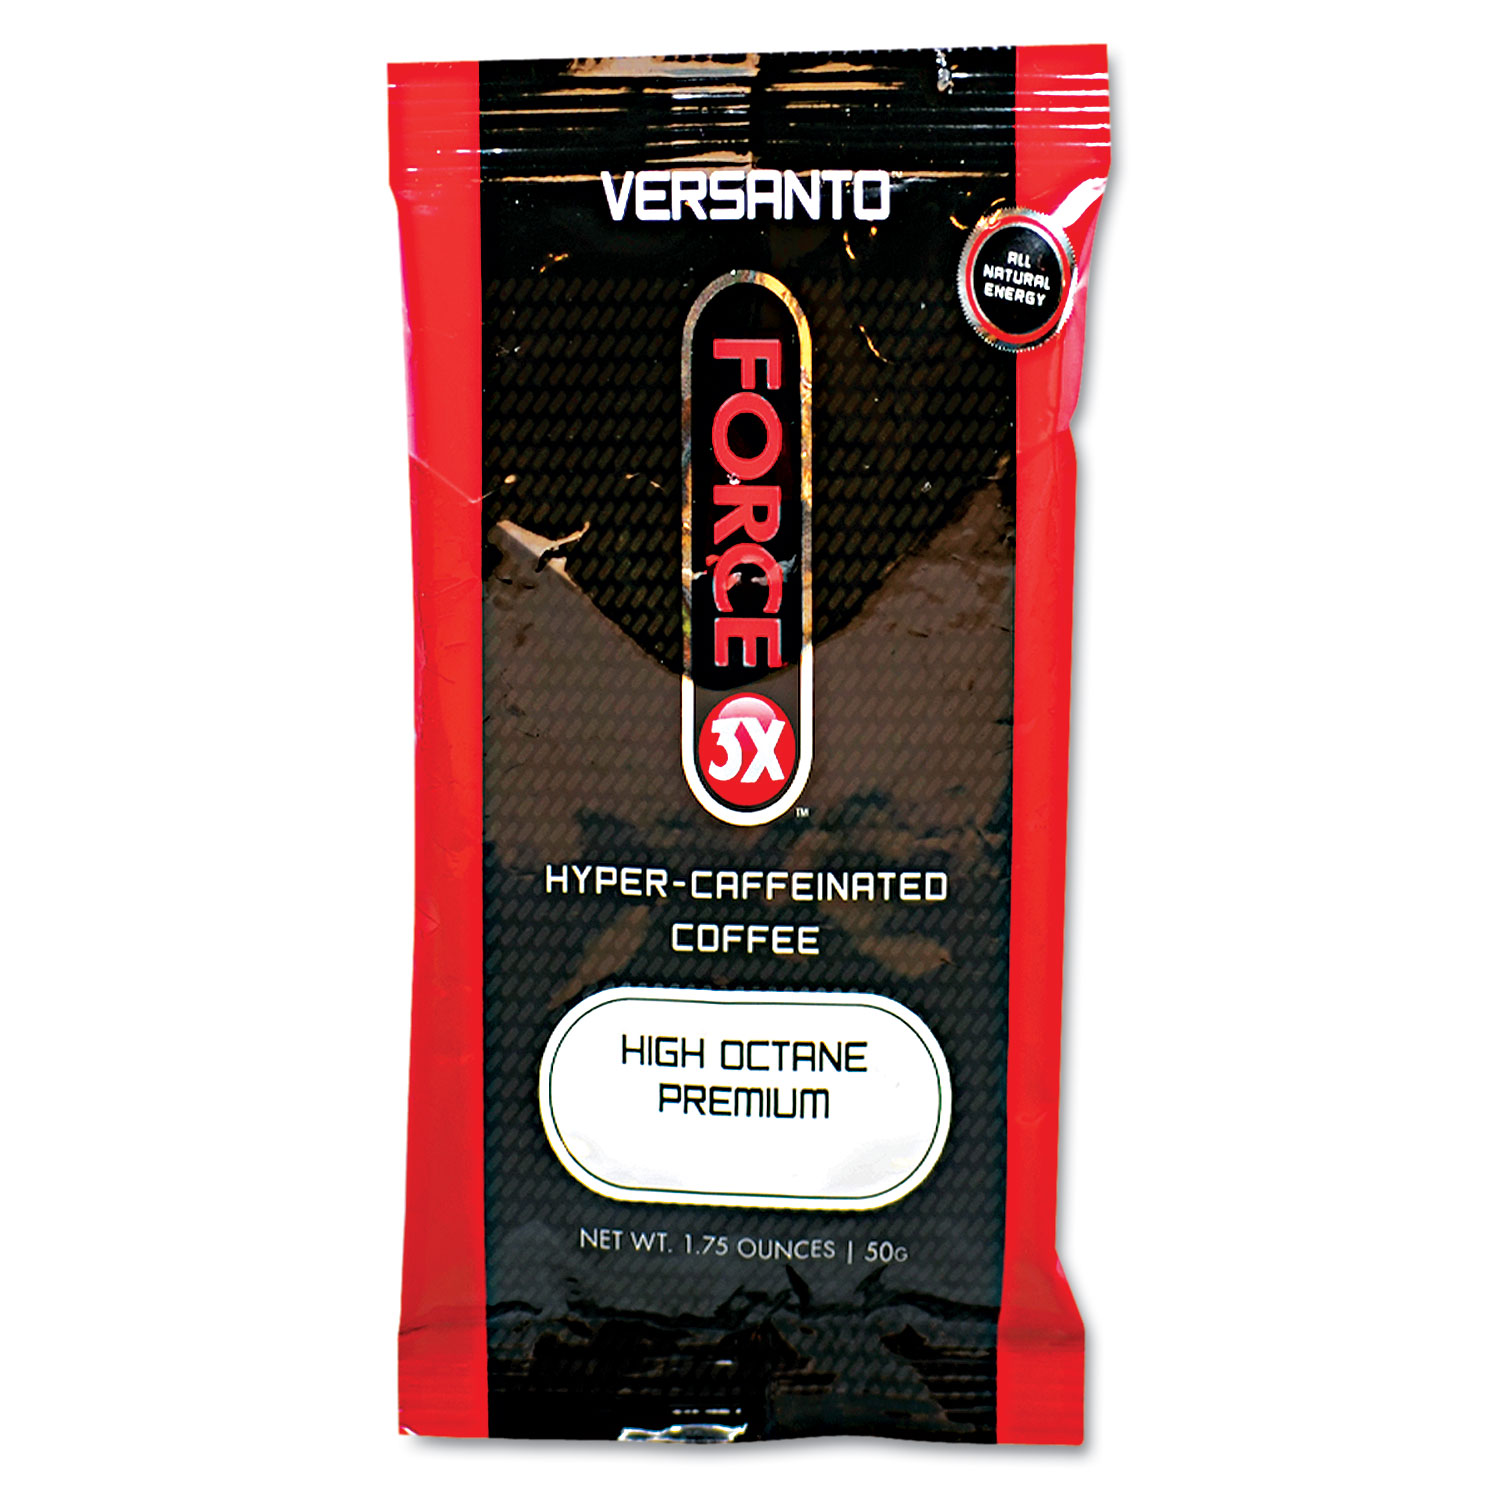 Force-3X Hyper-Caffeinated Coffee, High Octane Premium, 18/Carton